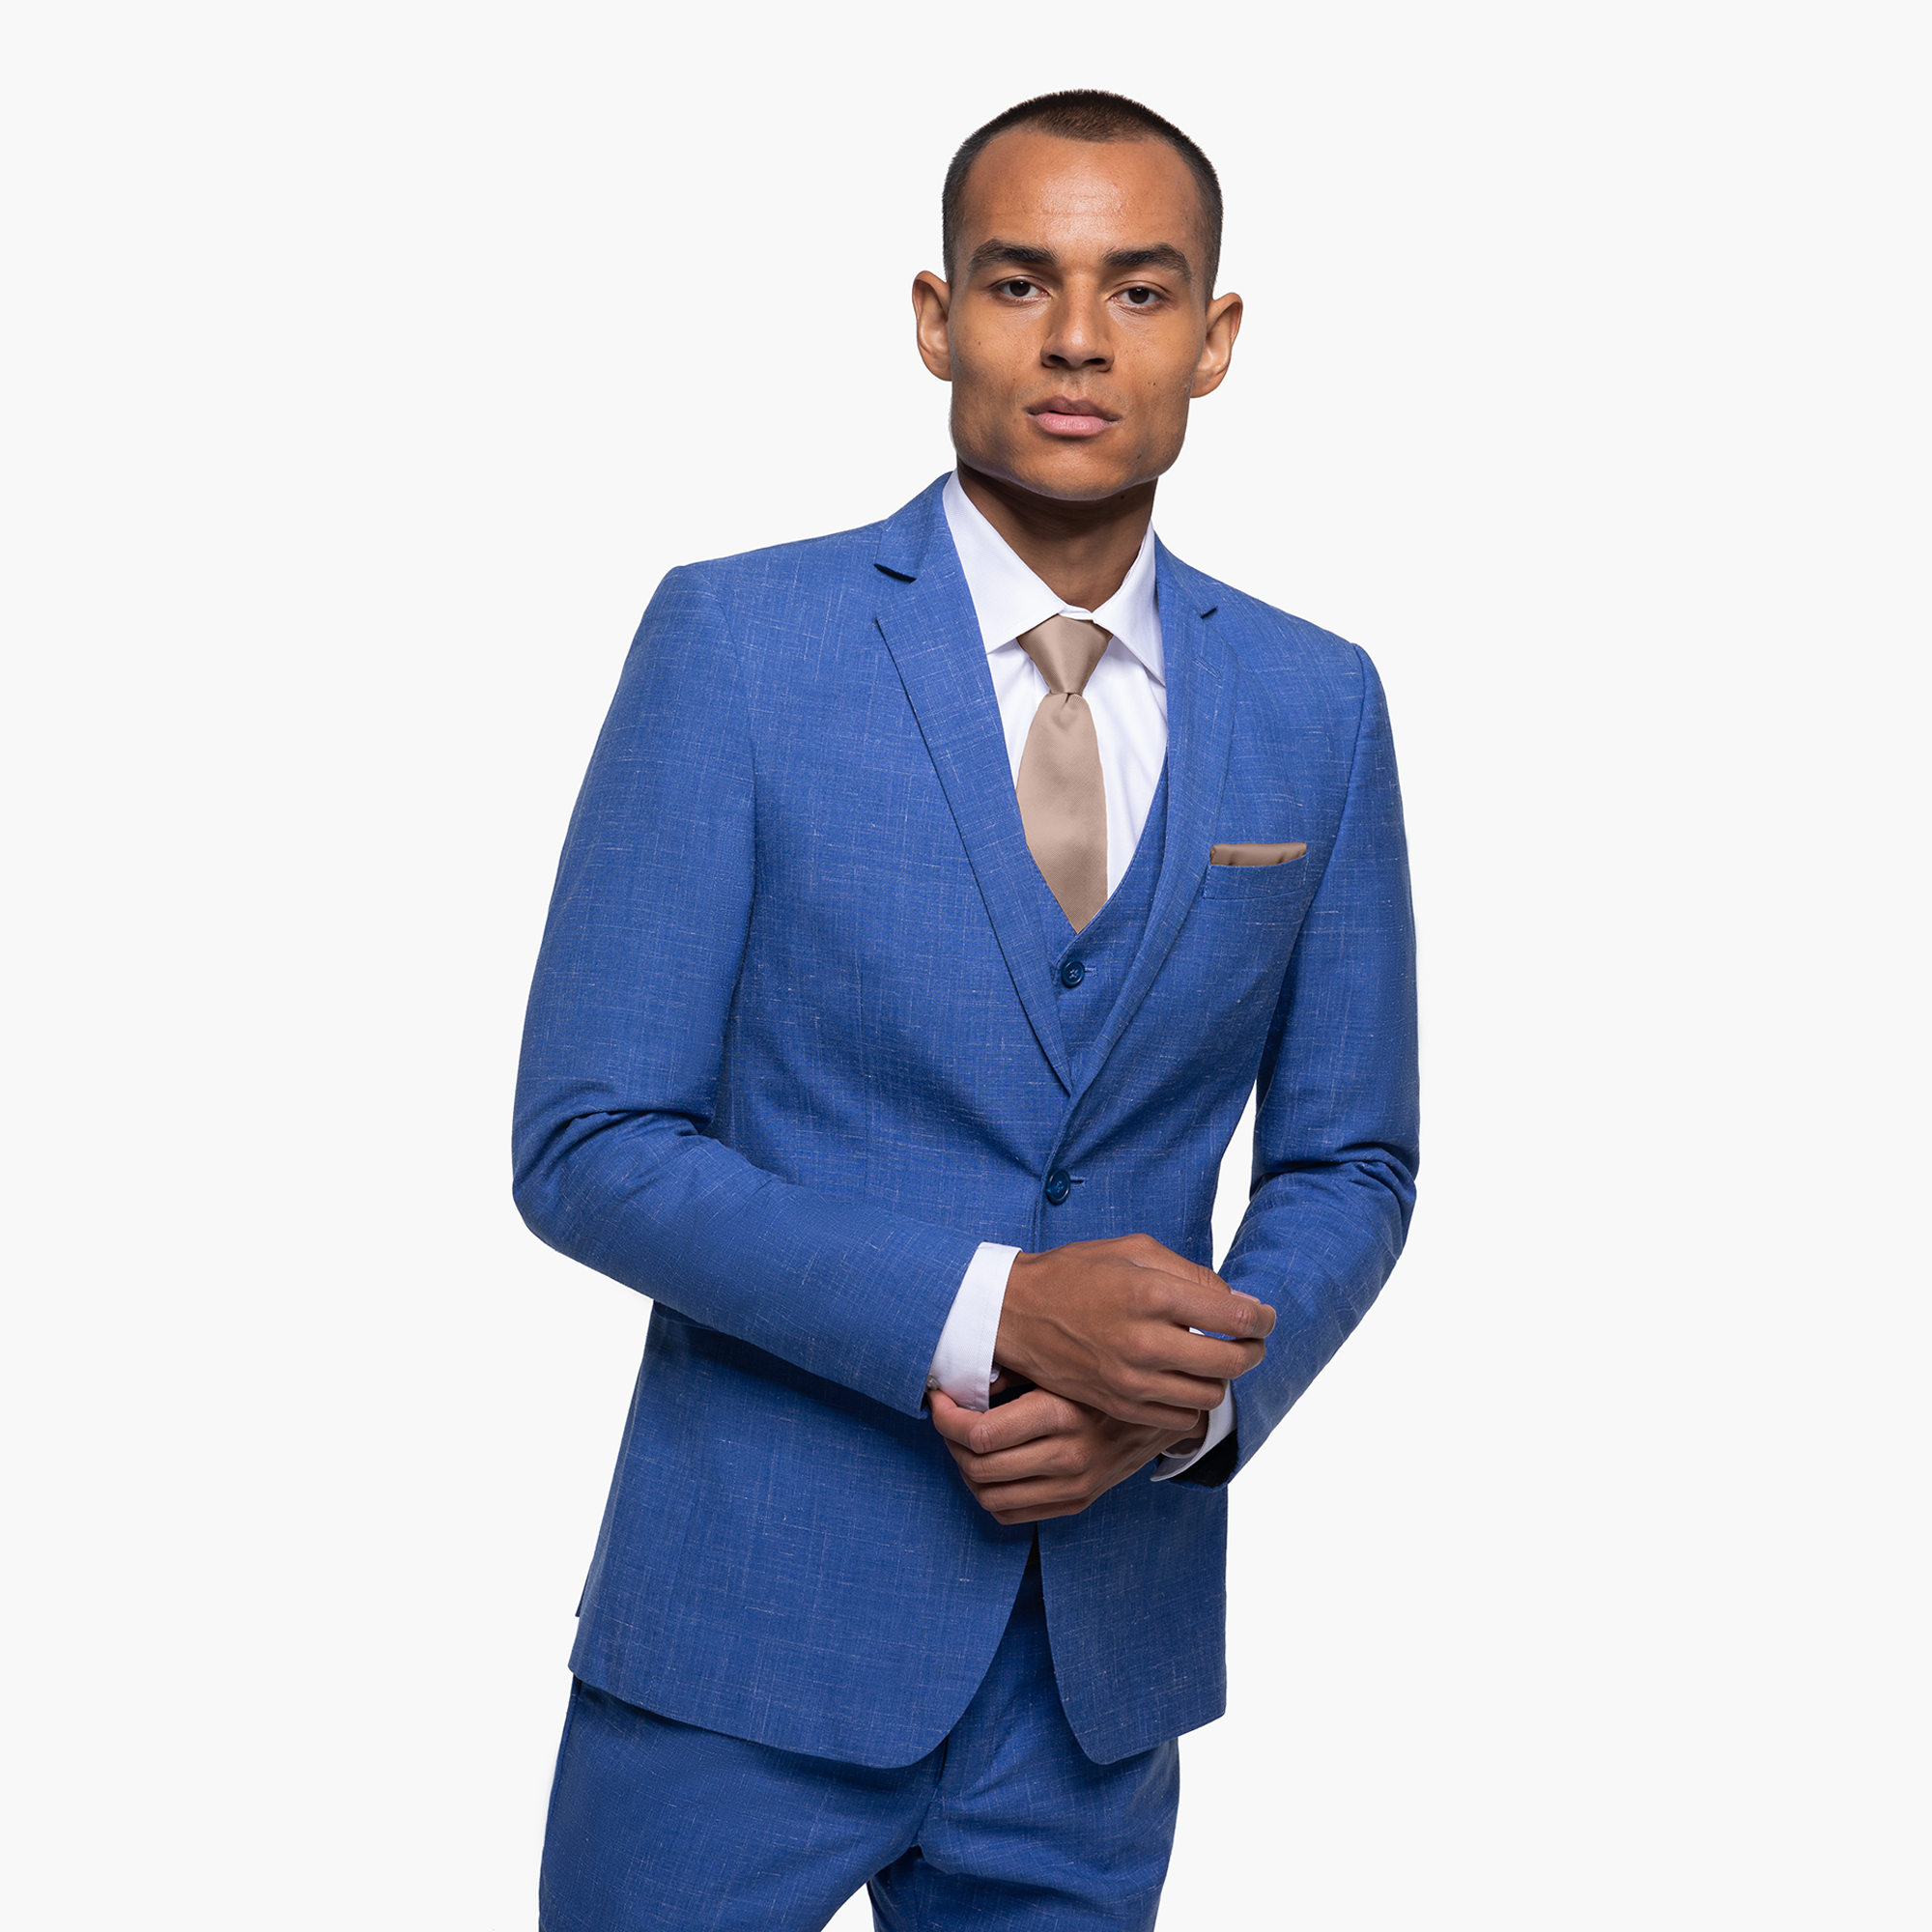 Indigo Blue notch lapel Suit on male model